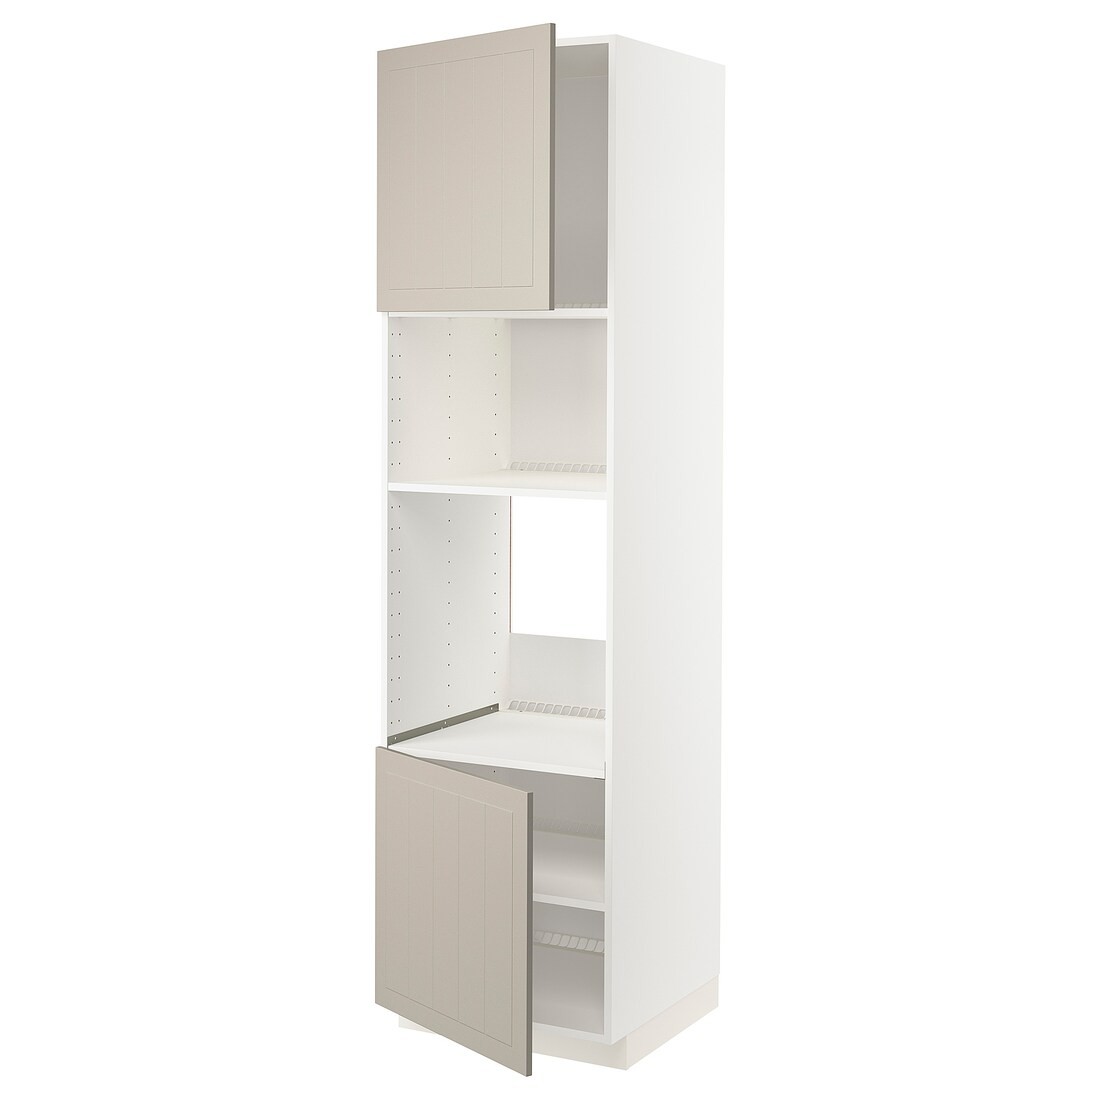 IKEA METOD МЕТОД Высокий шкаф для духовки / СВЧ, белый / Stensund бежевый, 60x60x220 см 09464571 | 094.645.71